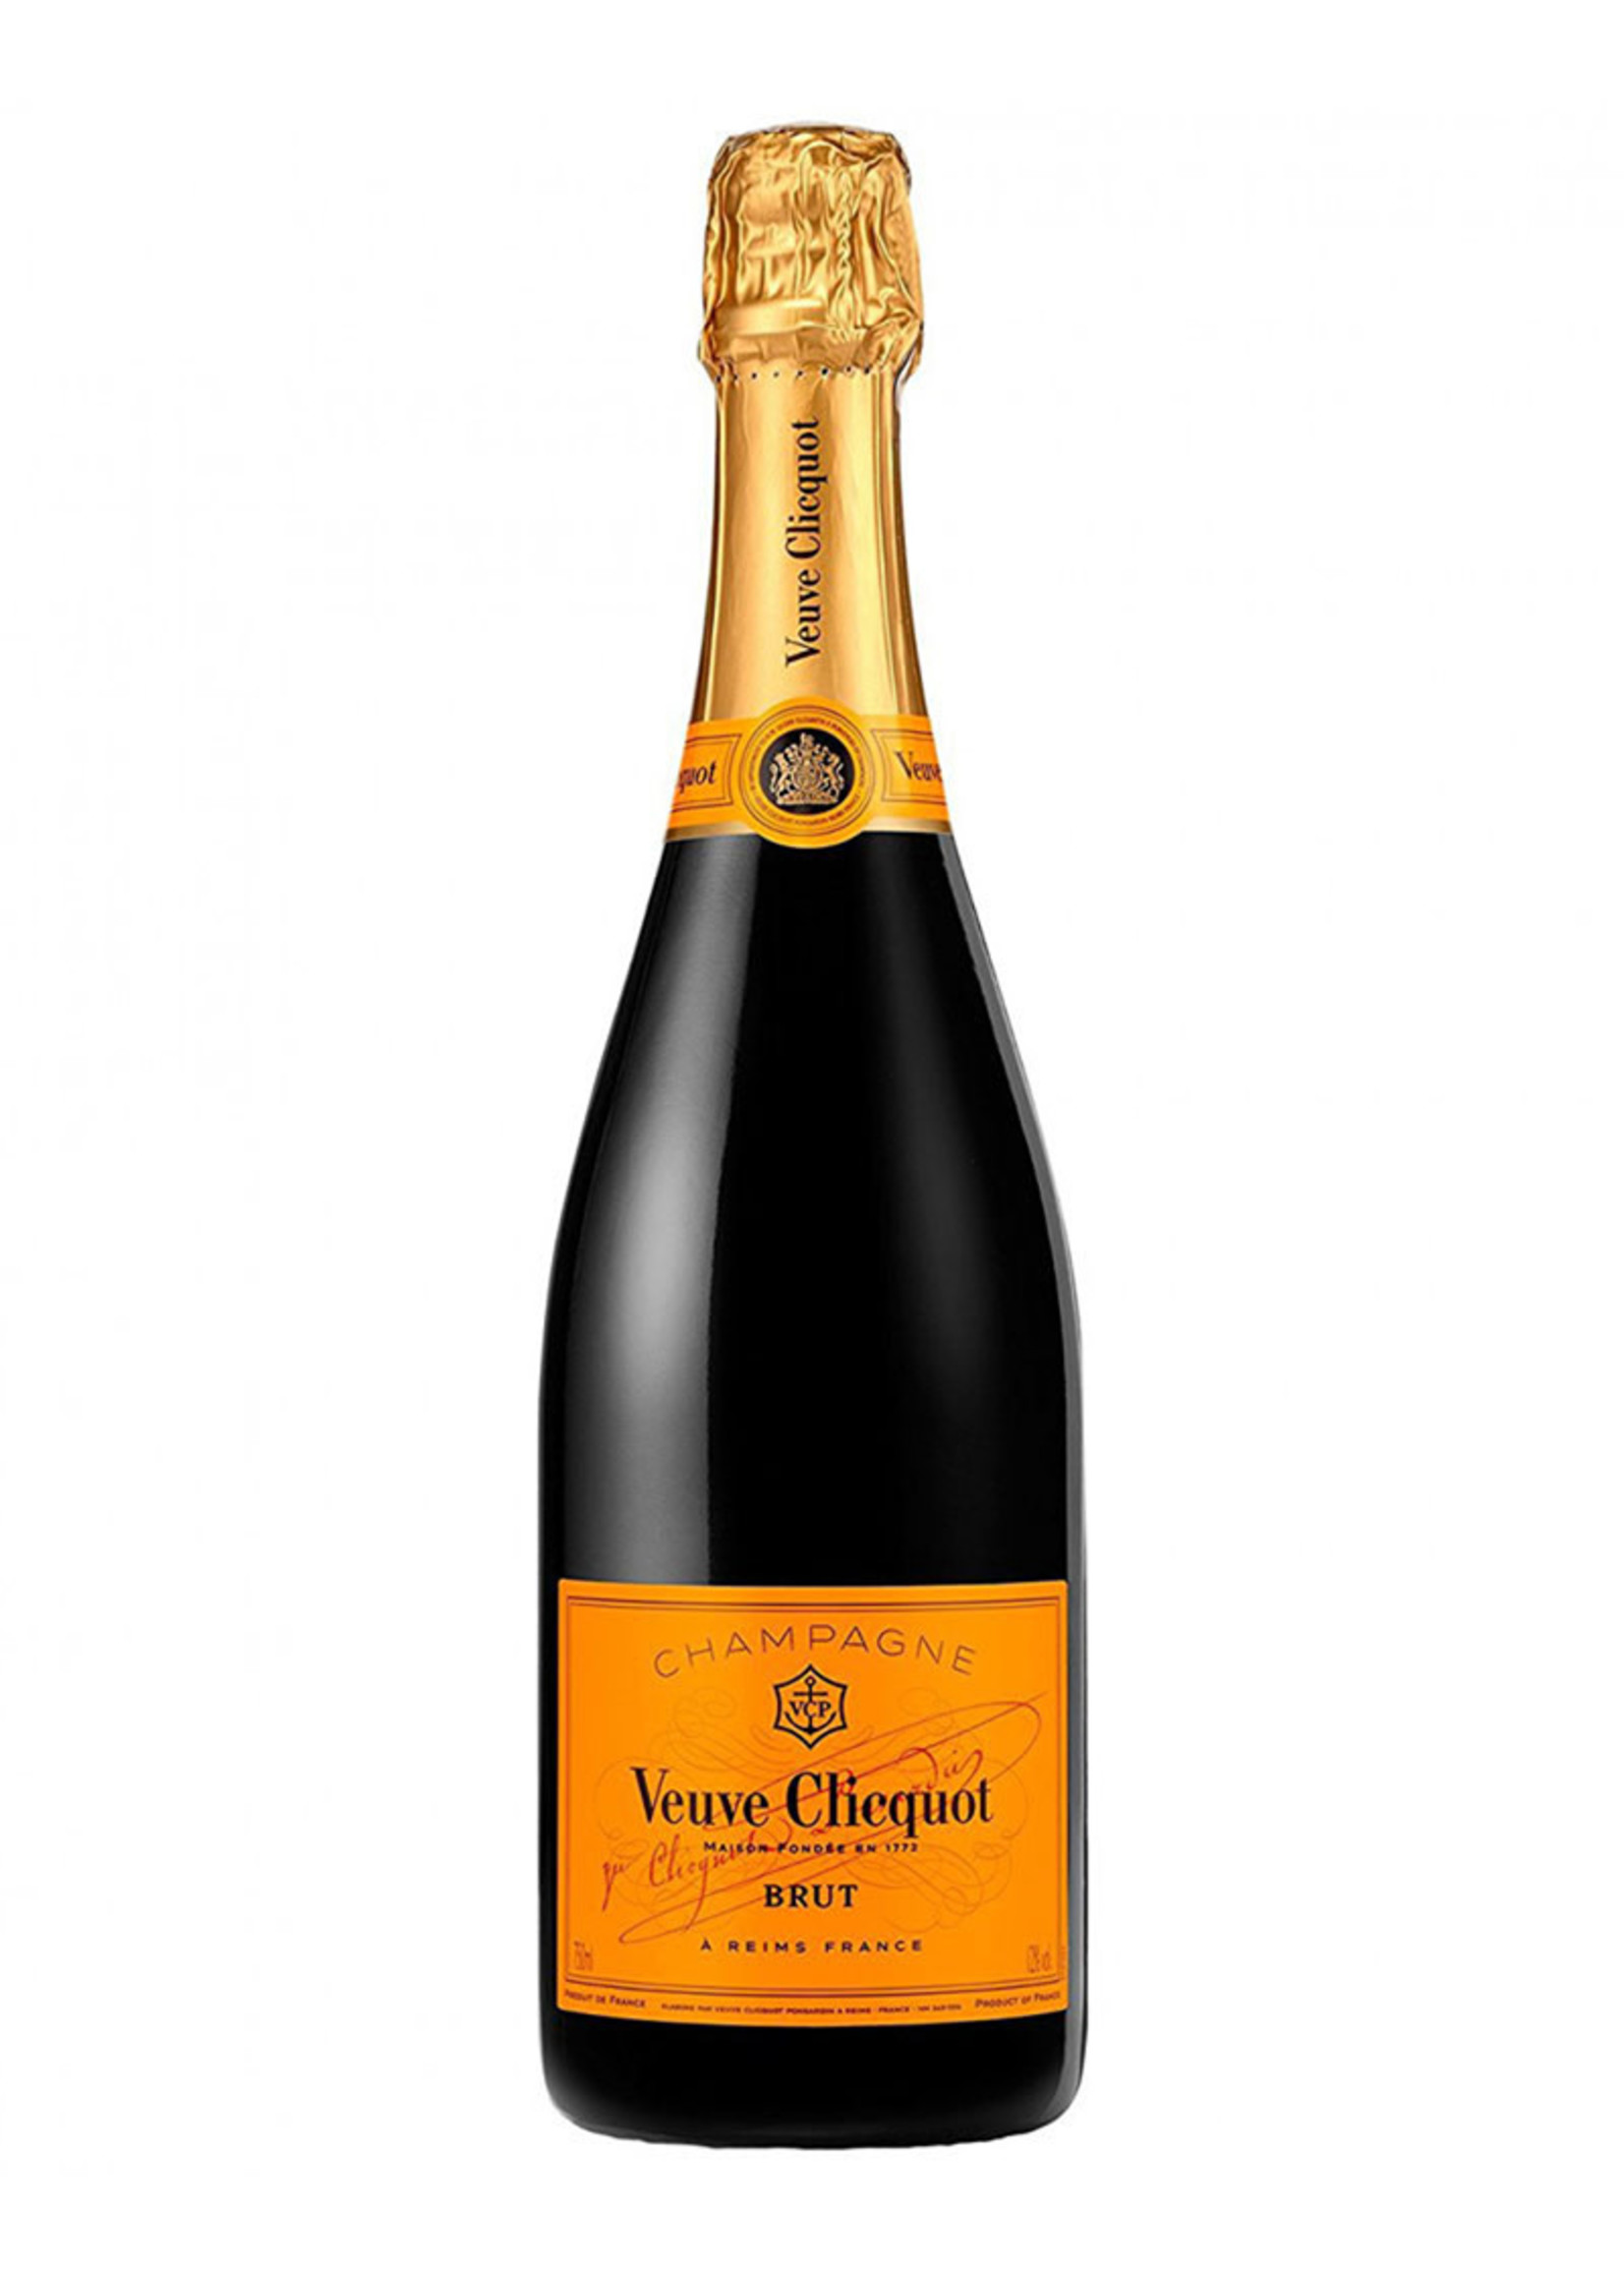 Veuve Clicquot NV Brut Champagne, France